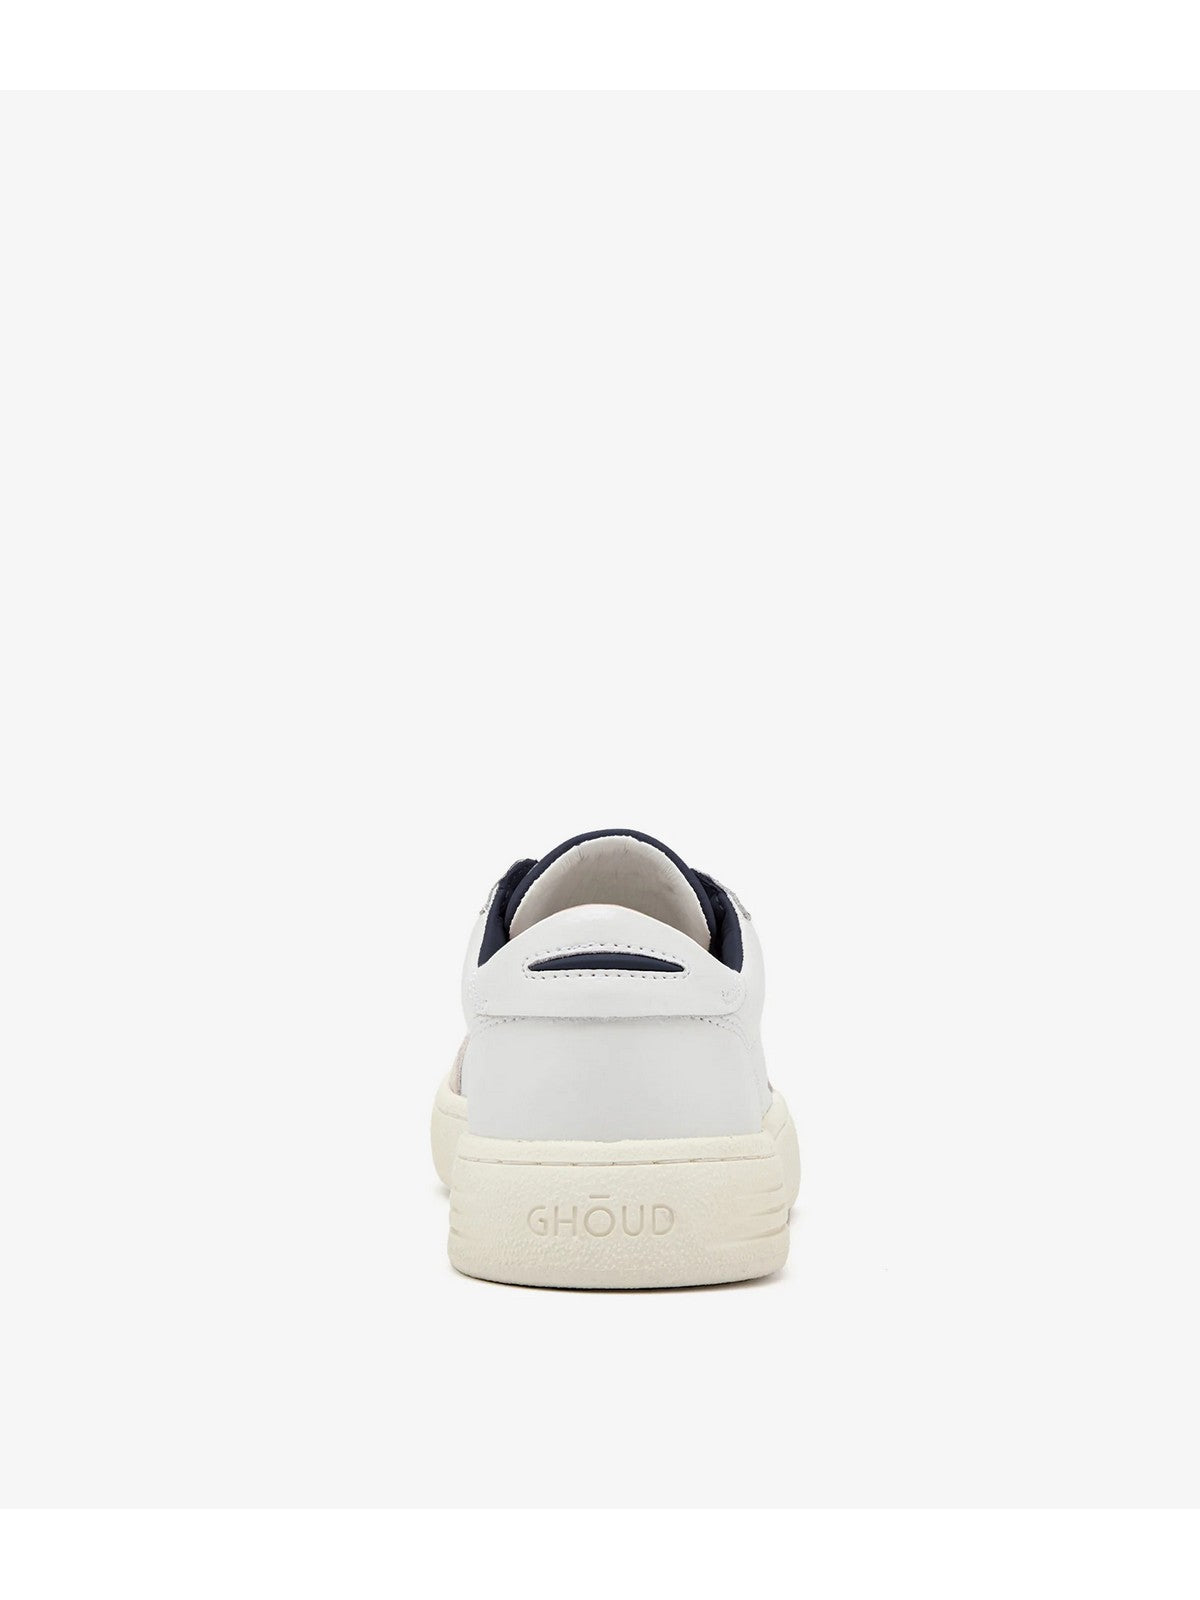 GHOUD Sneaker Uomo LIDO LDLM LS02 Bianco